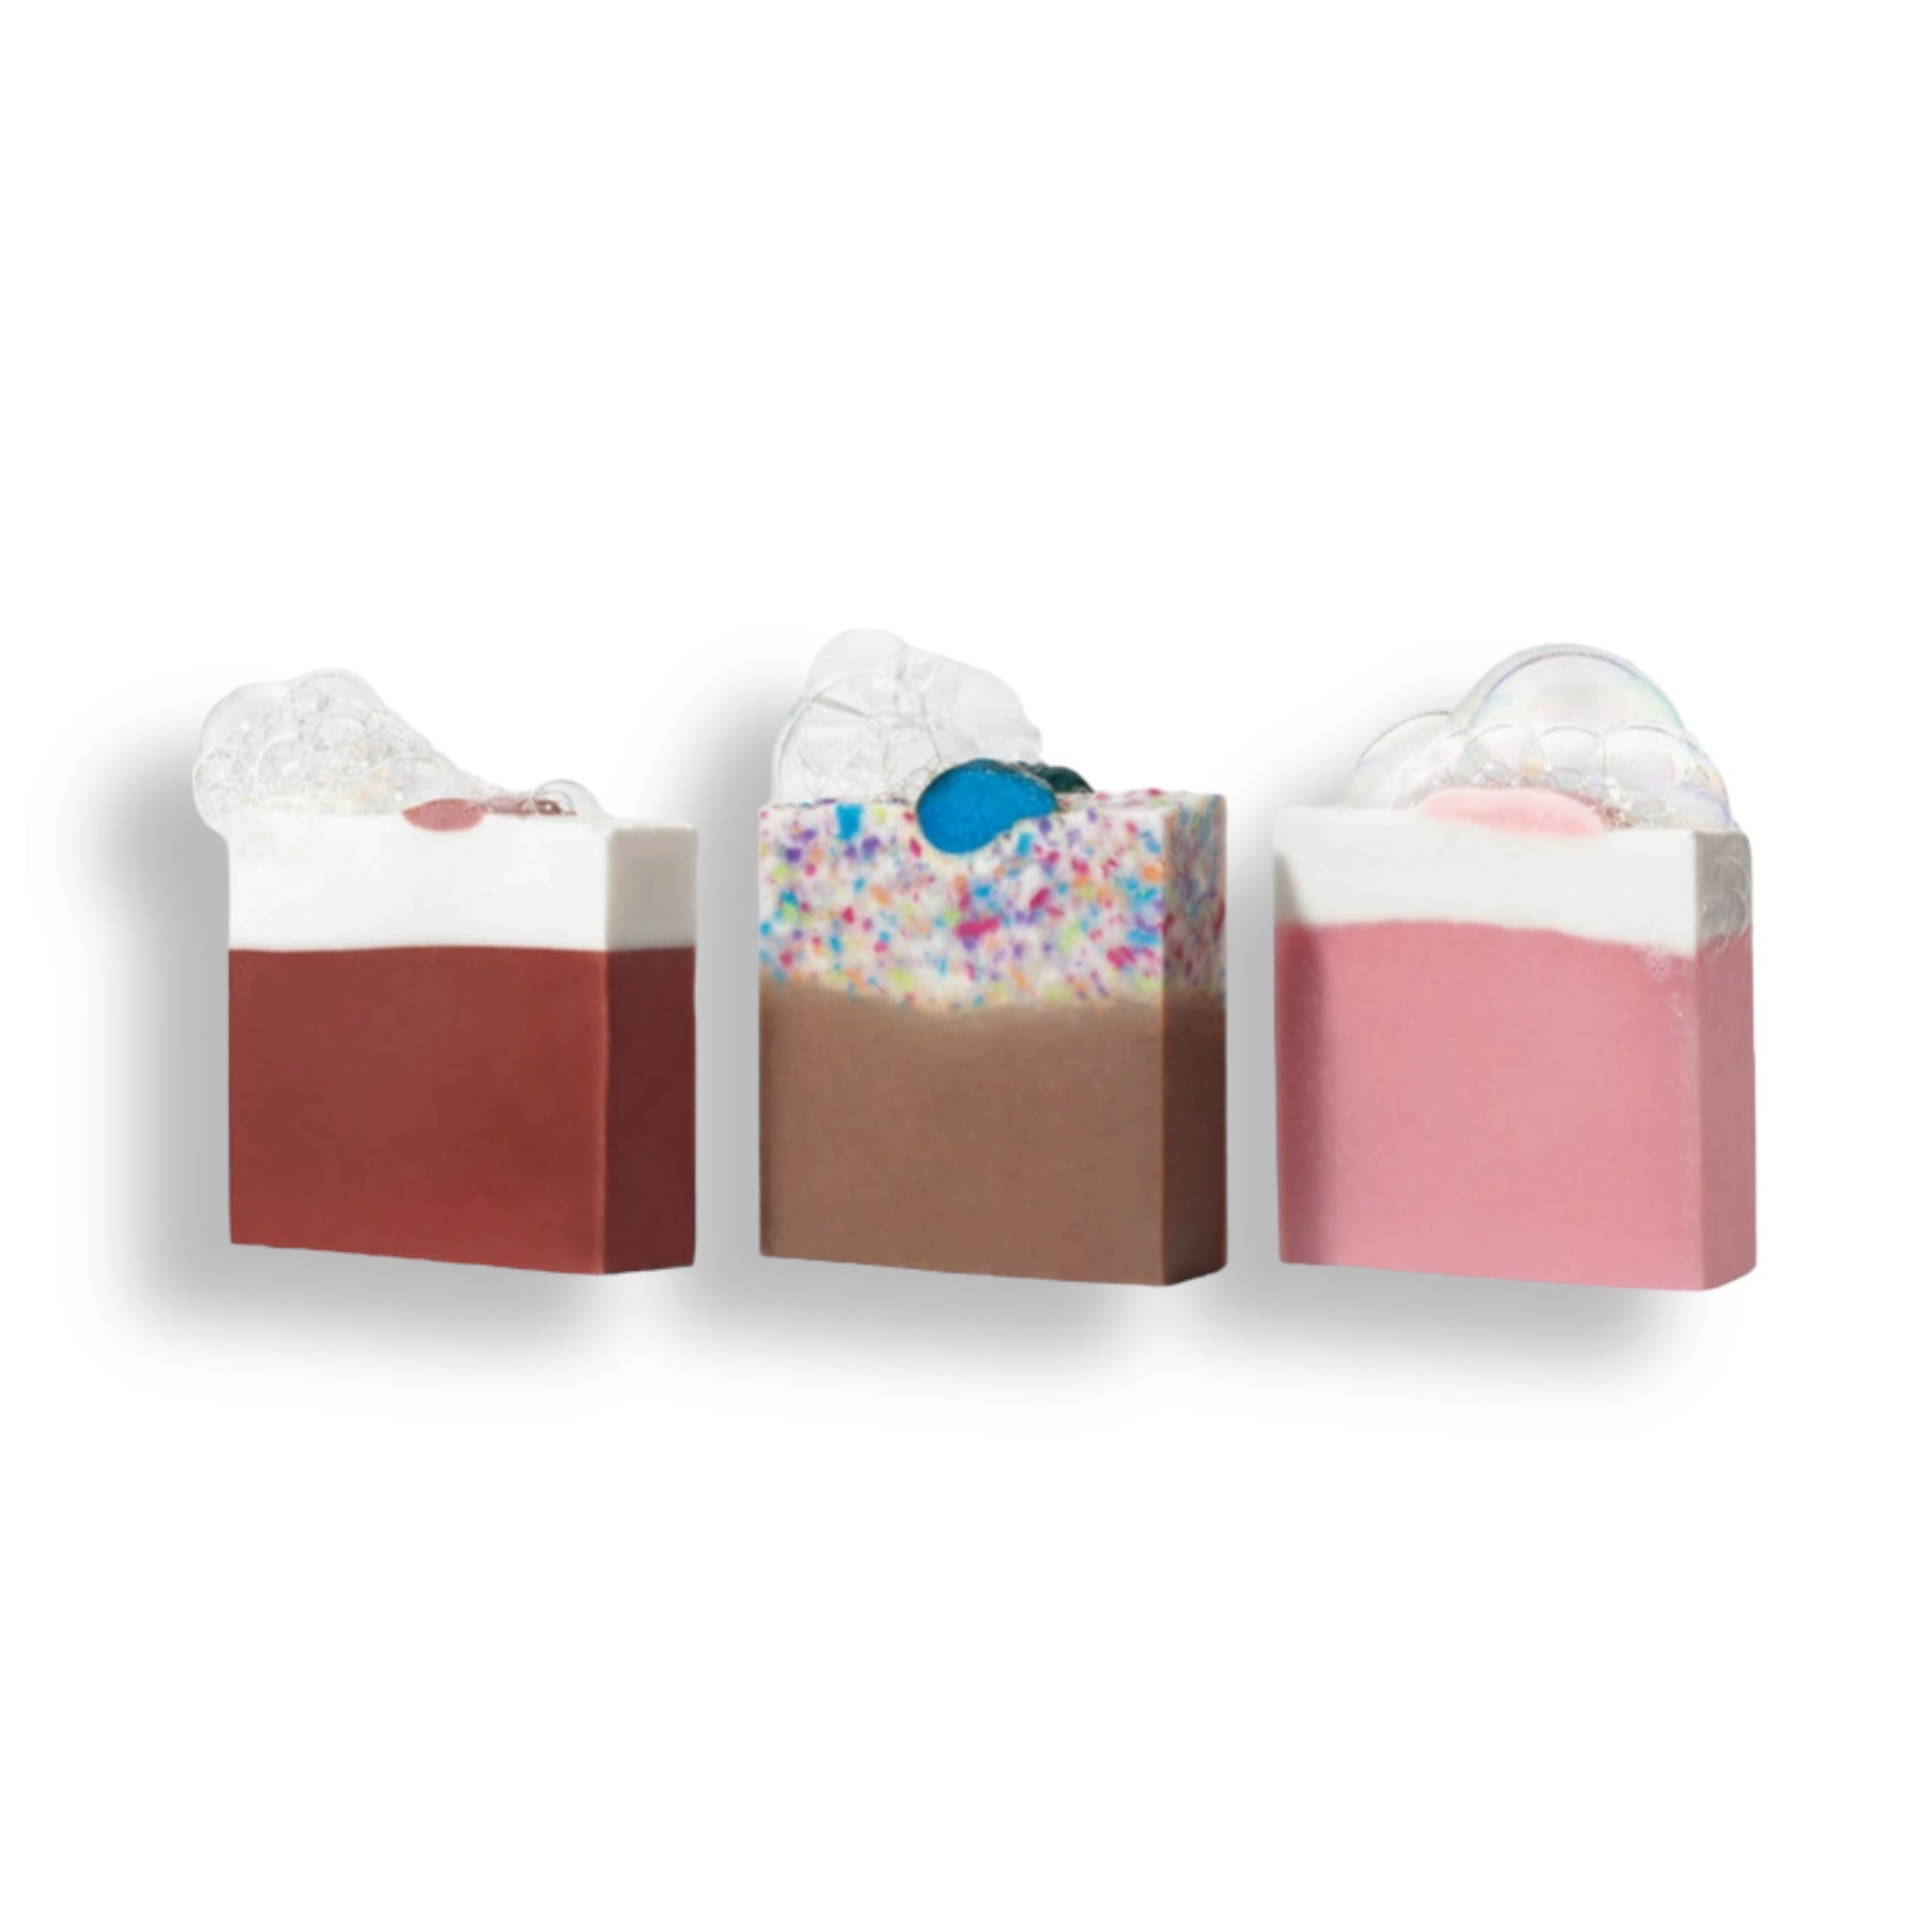 Sprinkles Cupcakes X Kitsch 3 Pc Soap Set Body Wash Bars